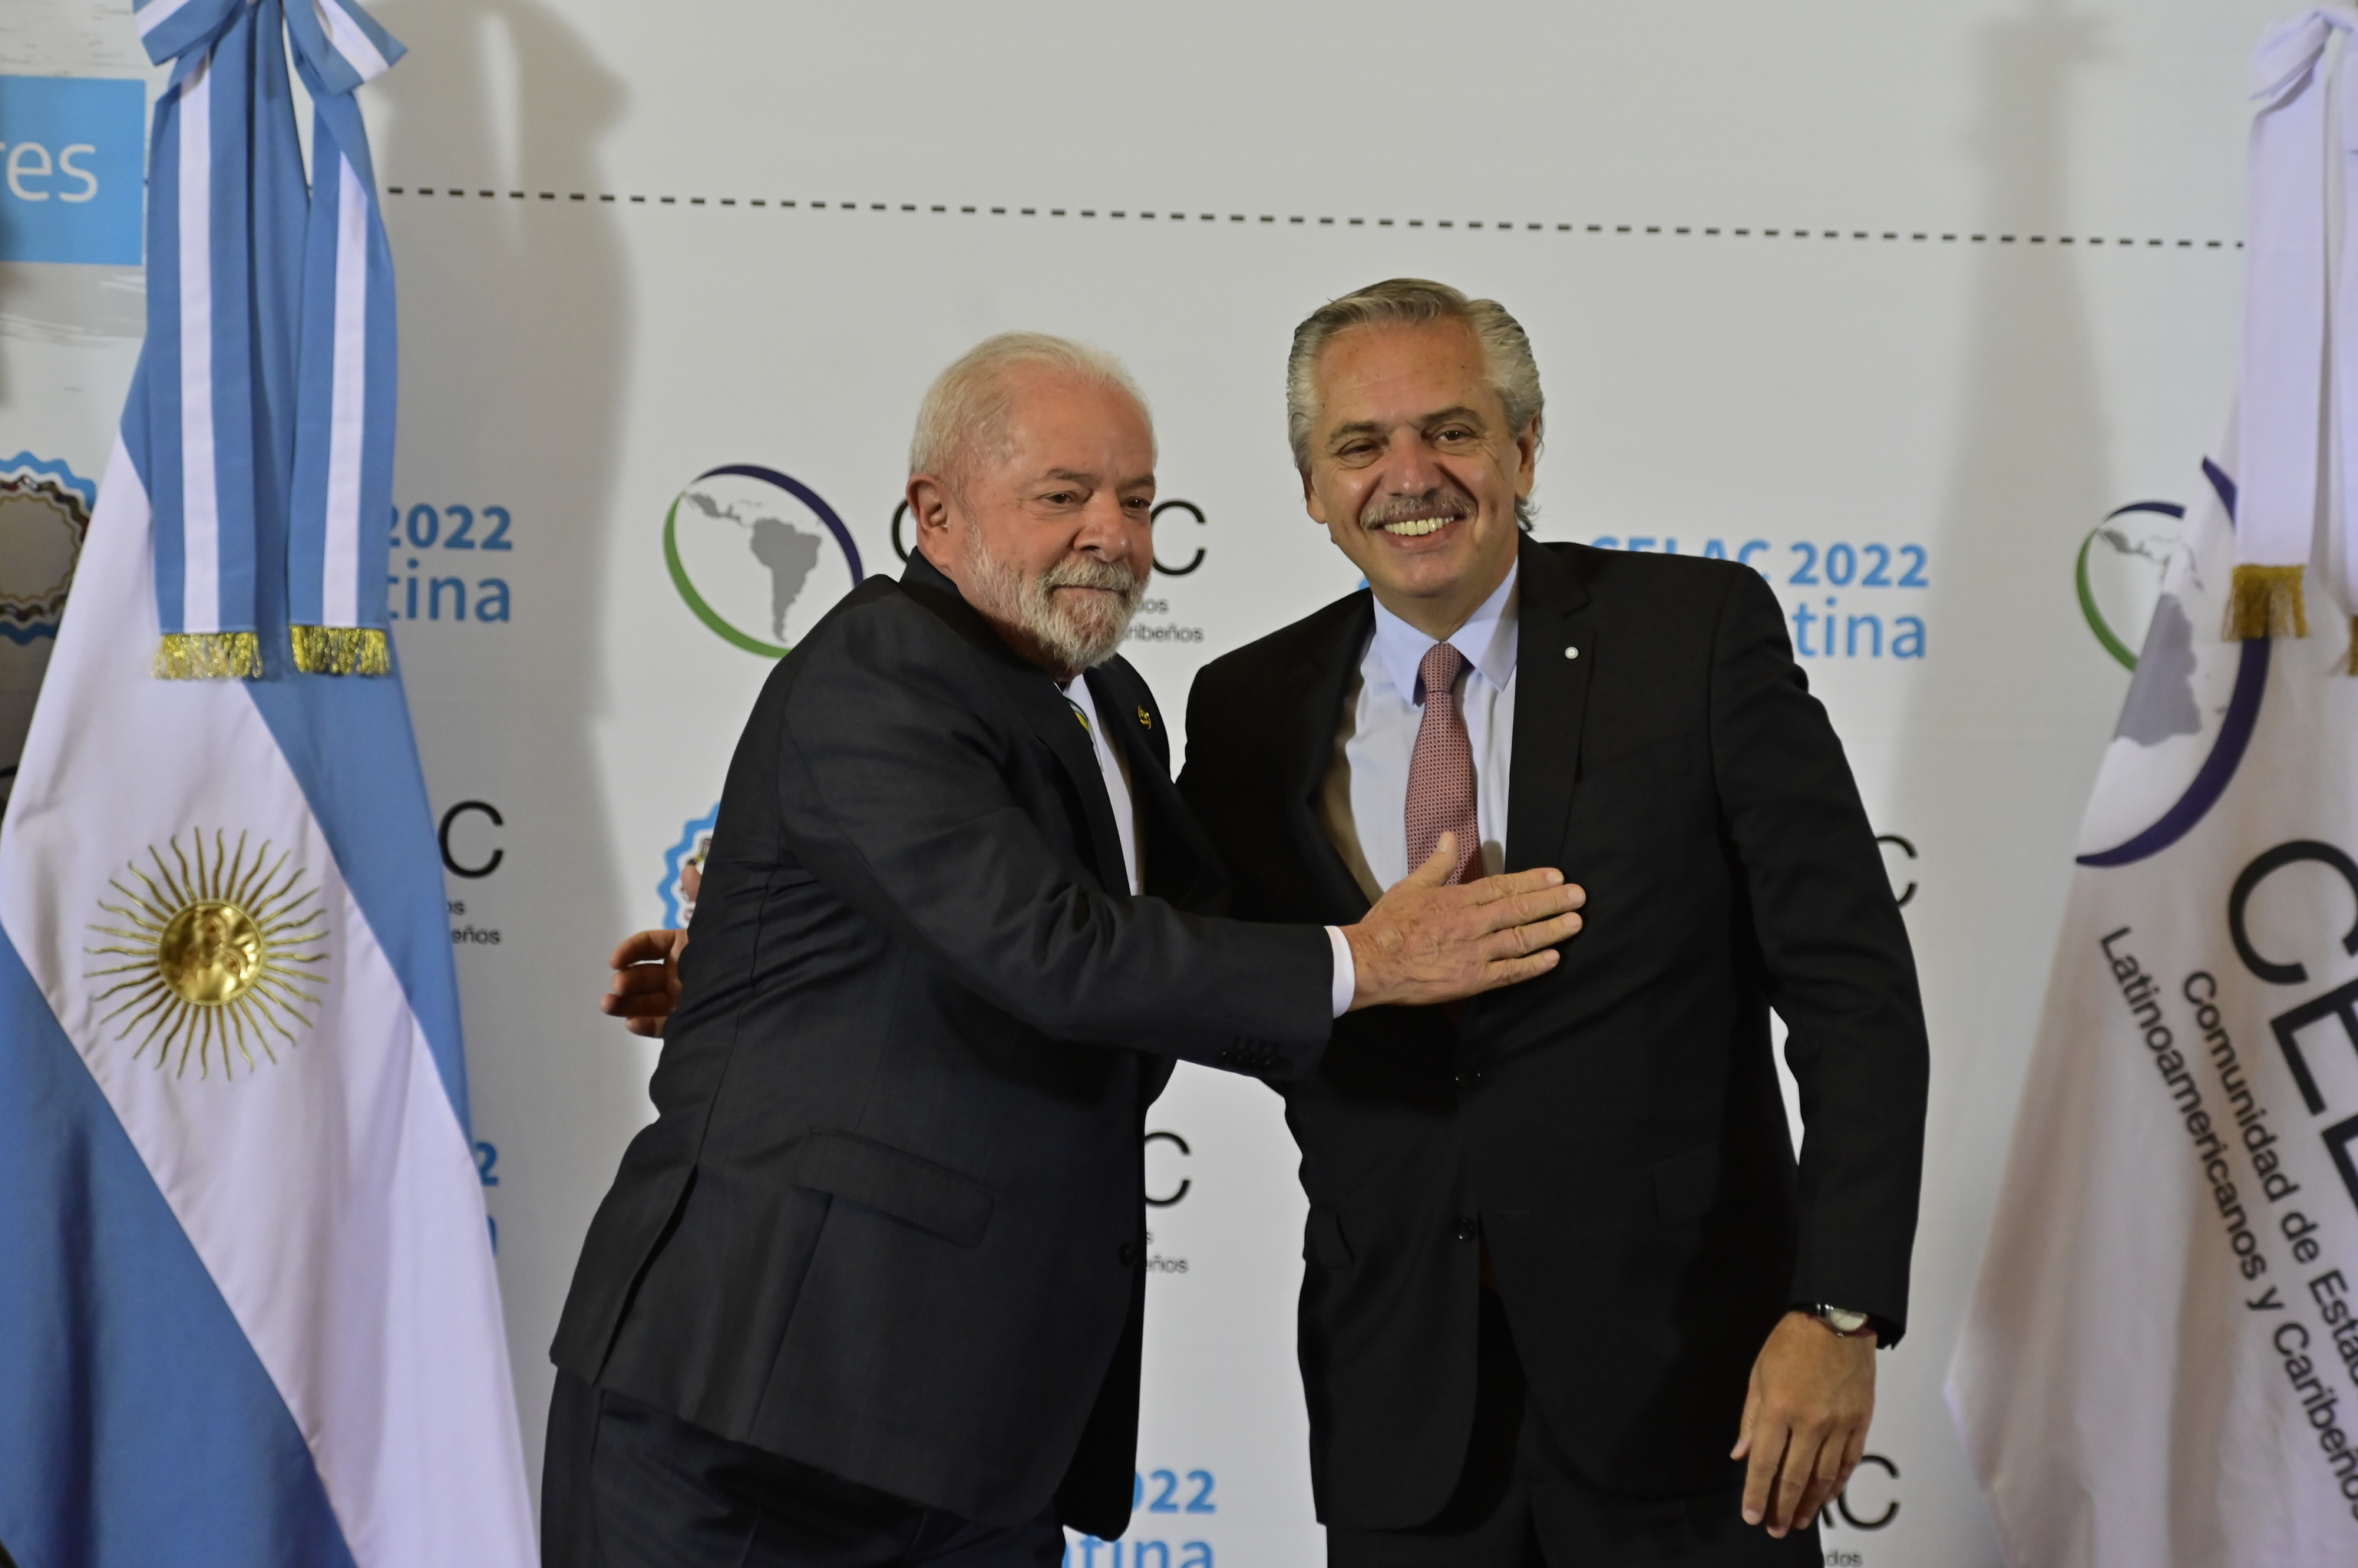 Alberto Fernández, presidente de Argentina, y Lula da Silva, presidente de Brasil